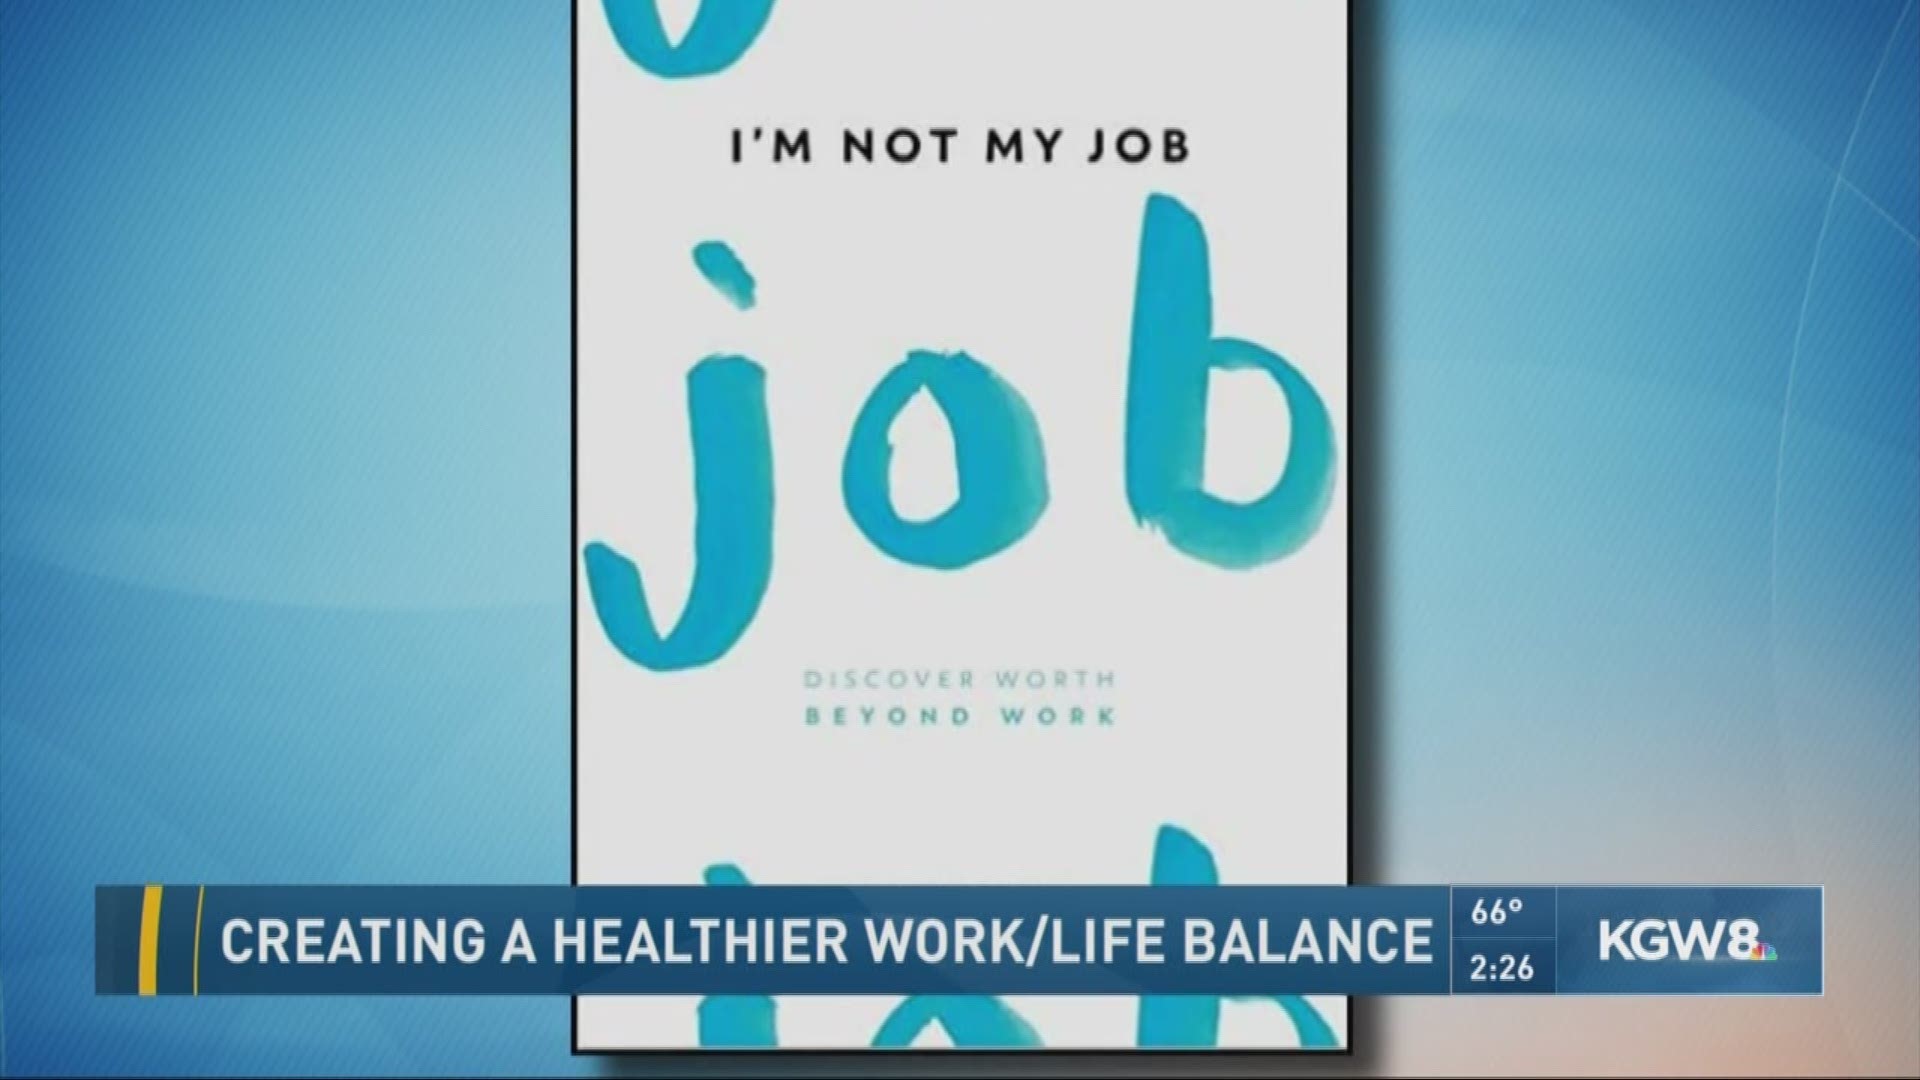 Building healthier work/life balance